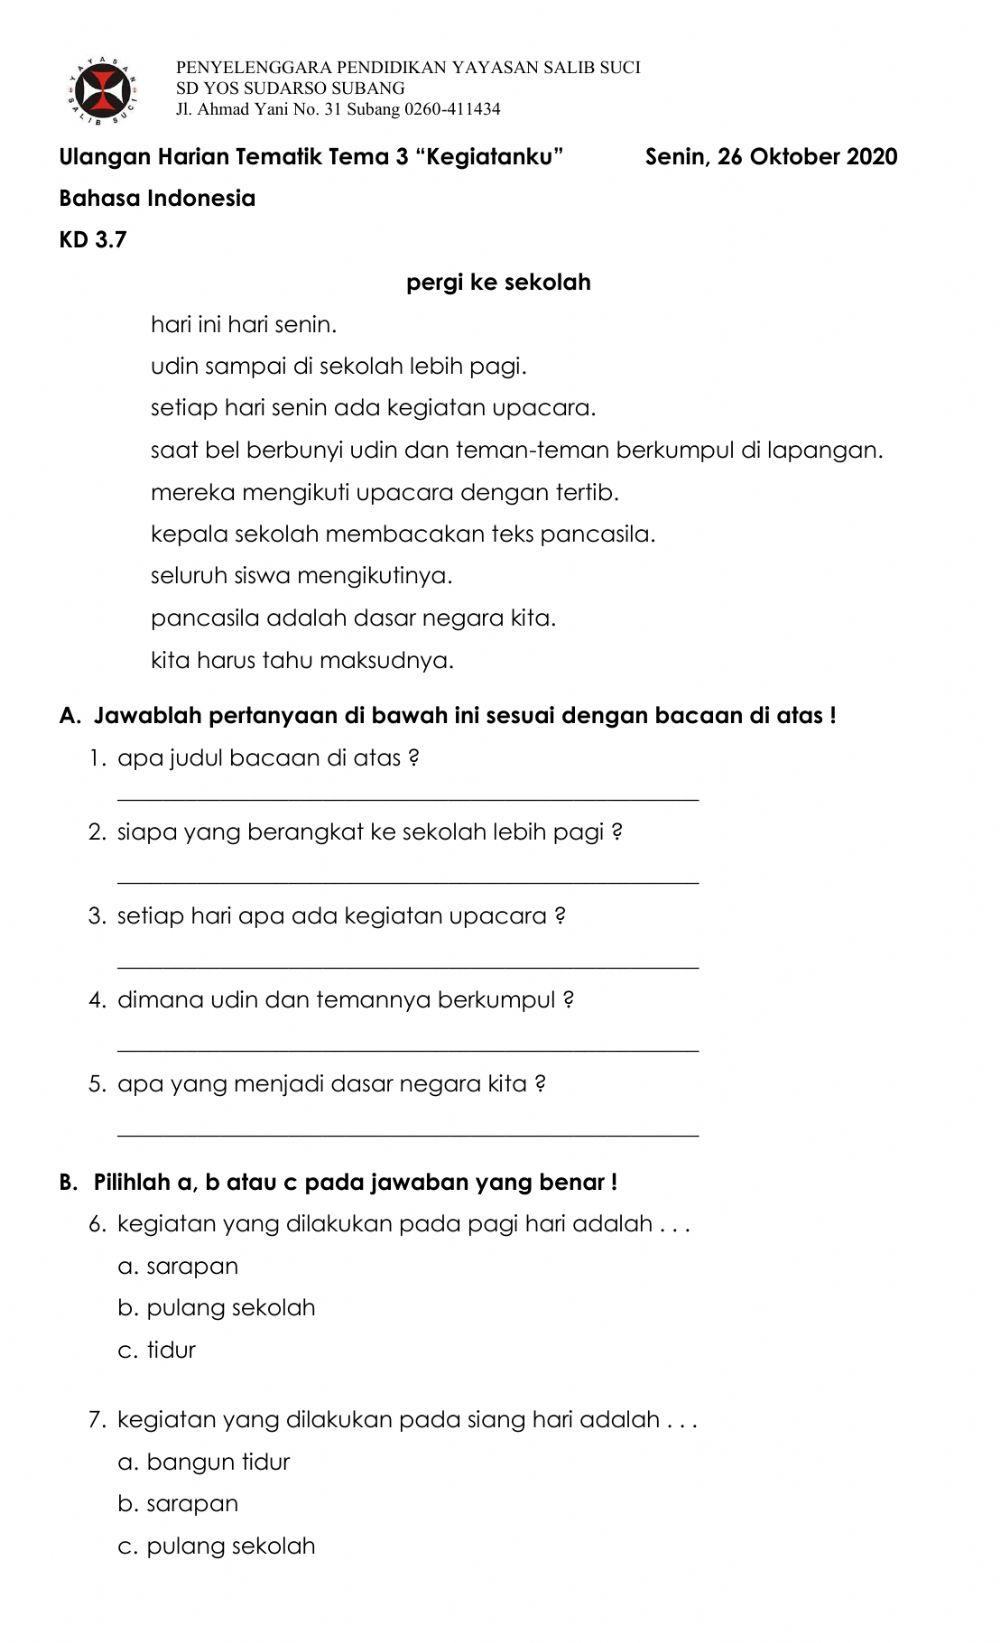 Ulangan Bahasa Indonesia Tema 3 -Kegiatanku-